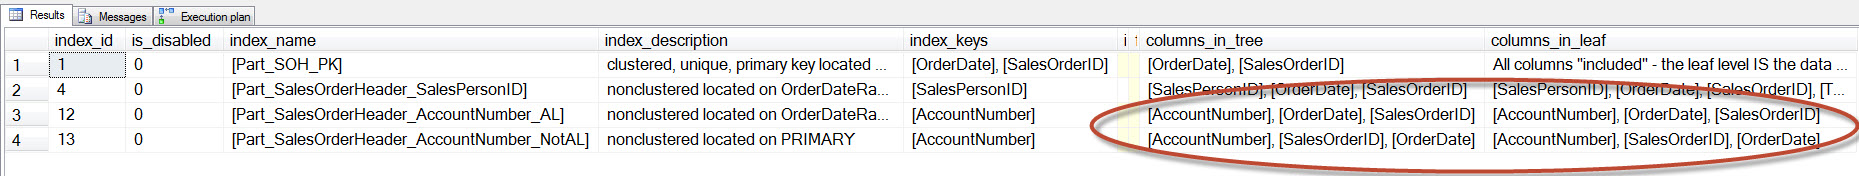 sp_helpindex for Sales.Part_SalesOrderHeader